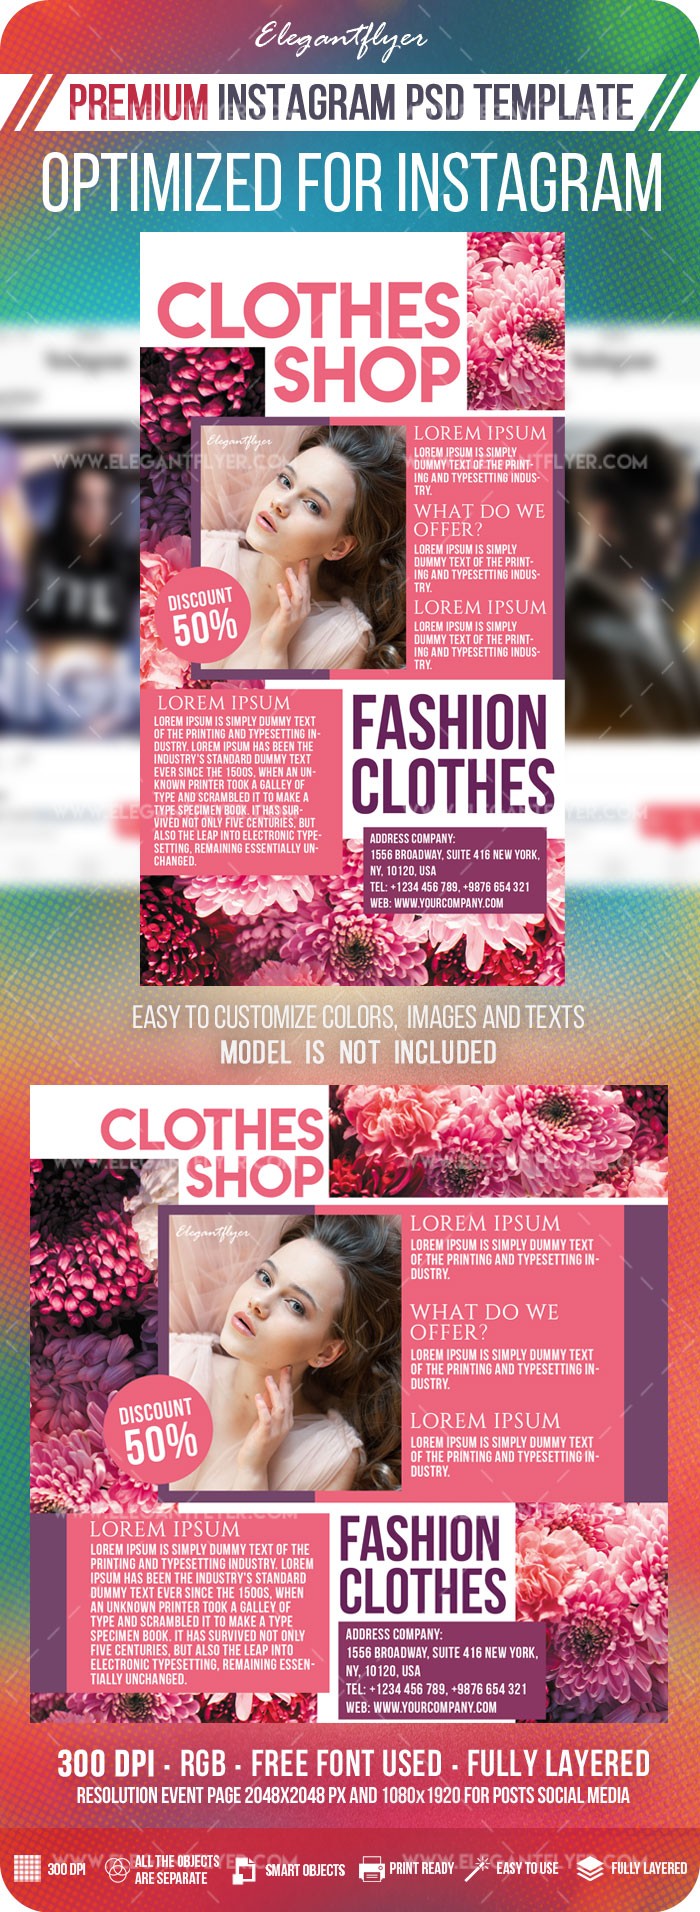 Clothes Shop Instagram by ElegantFlyer